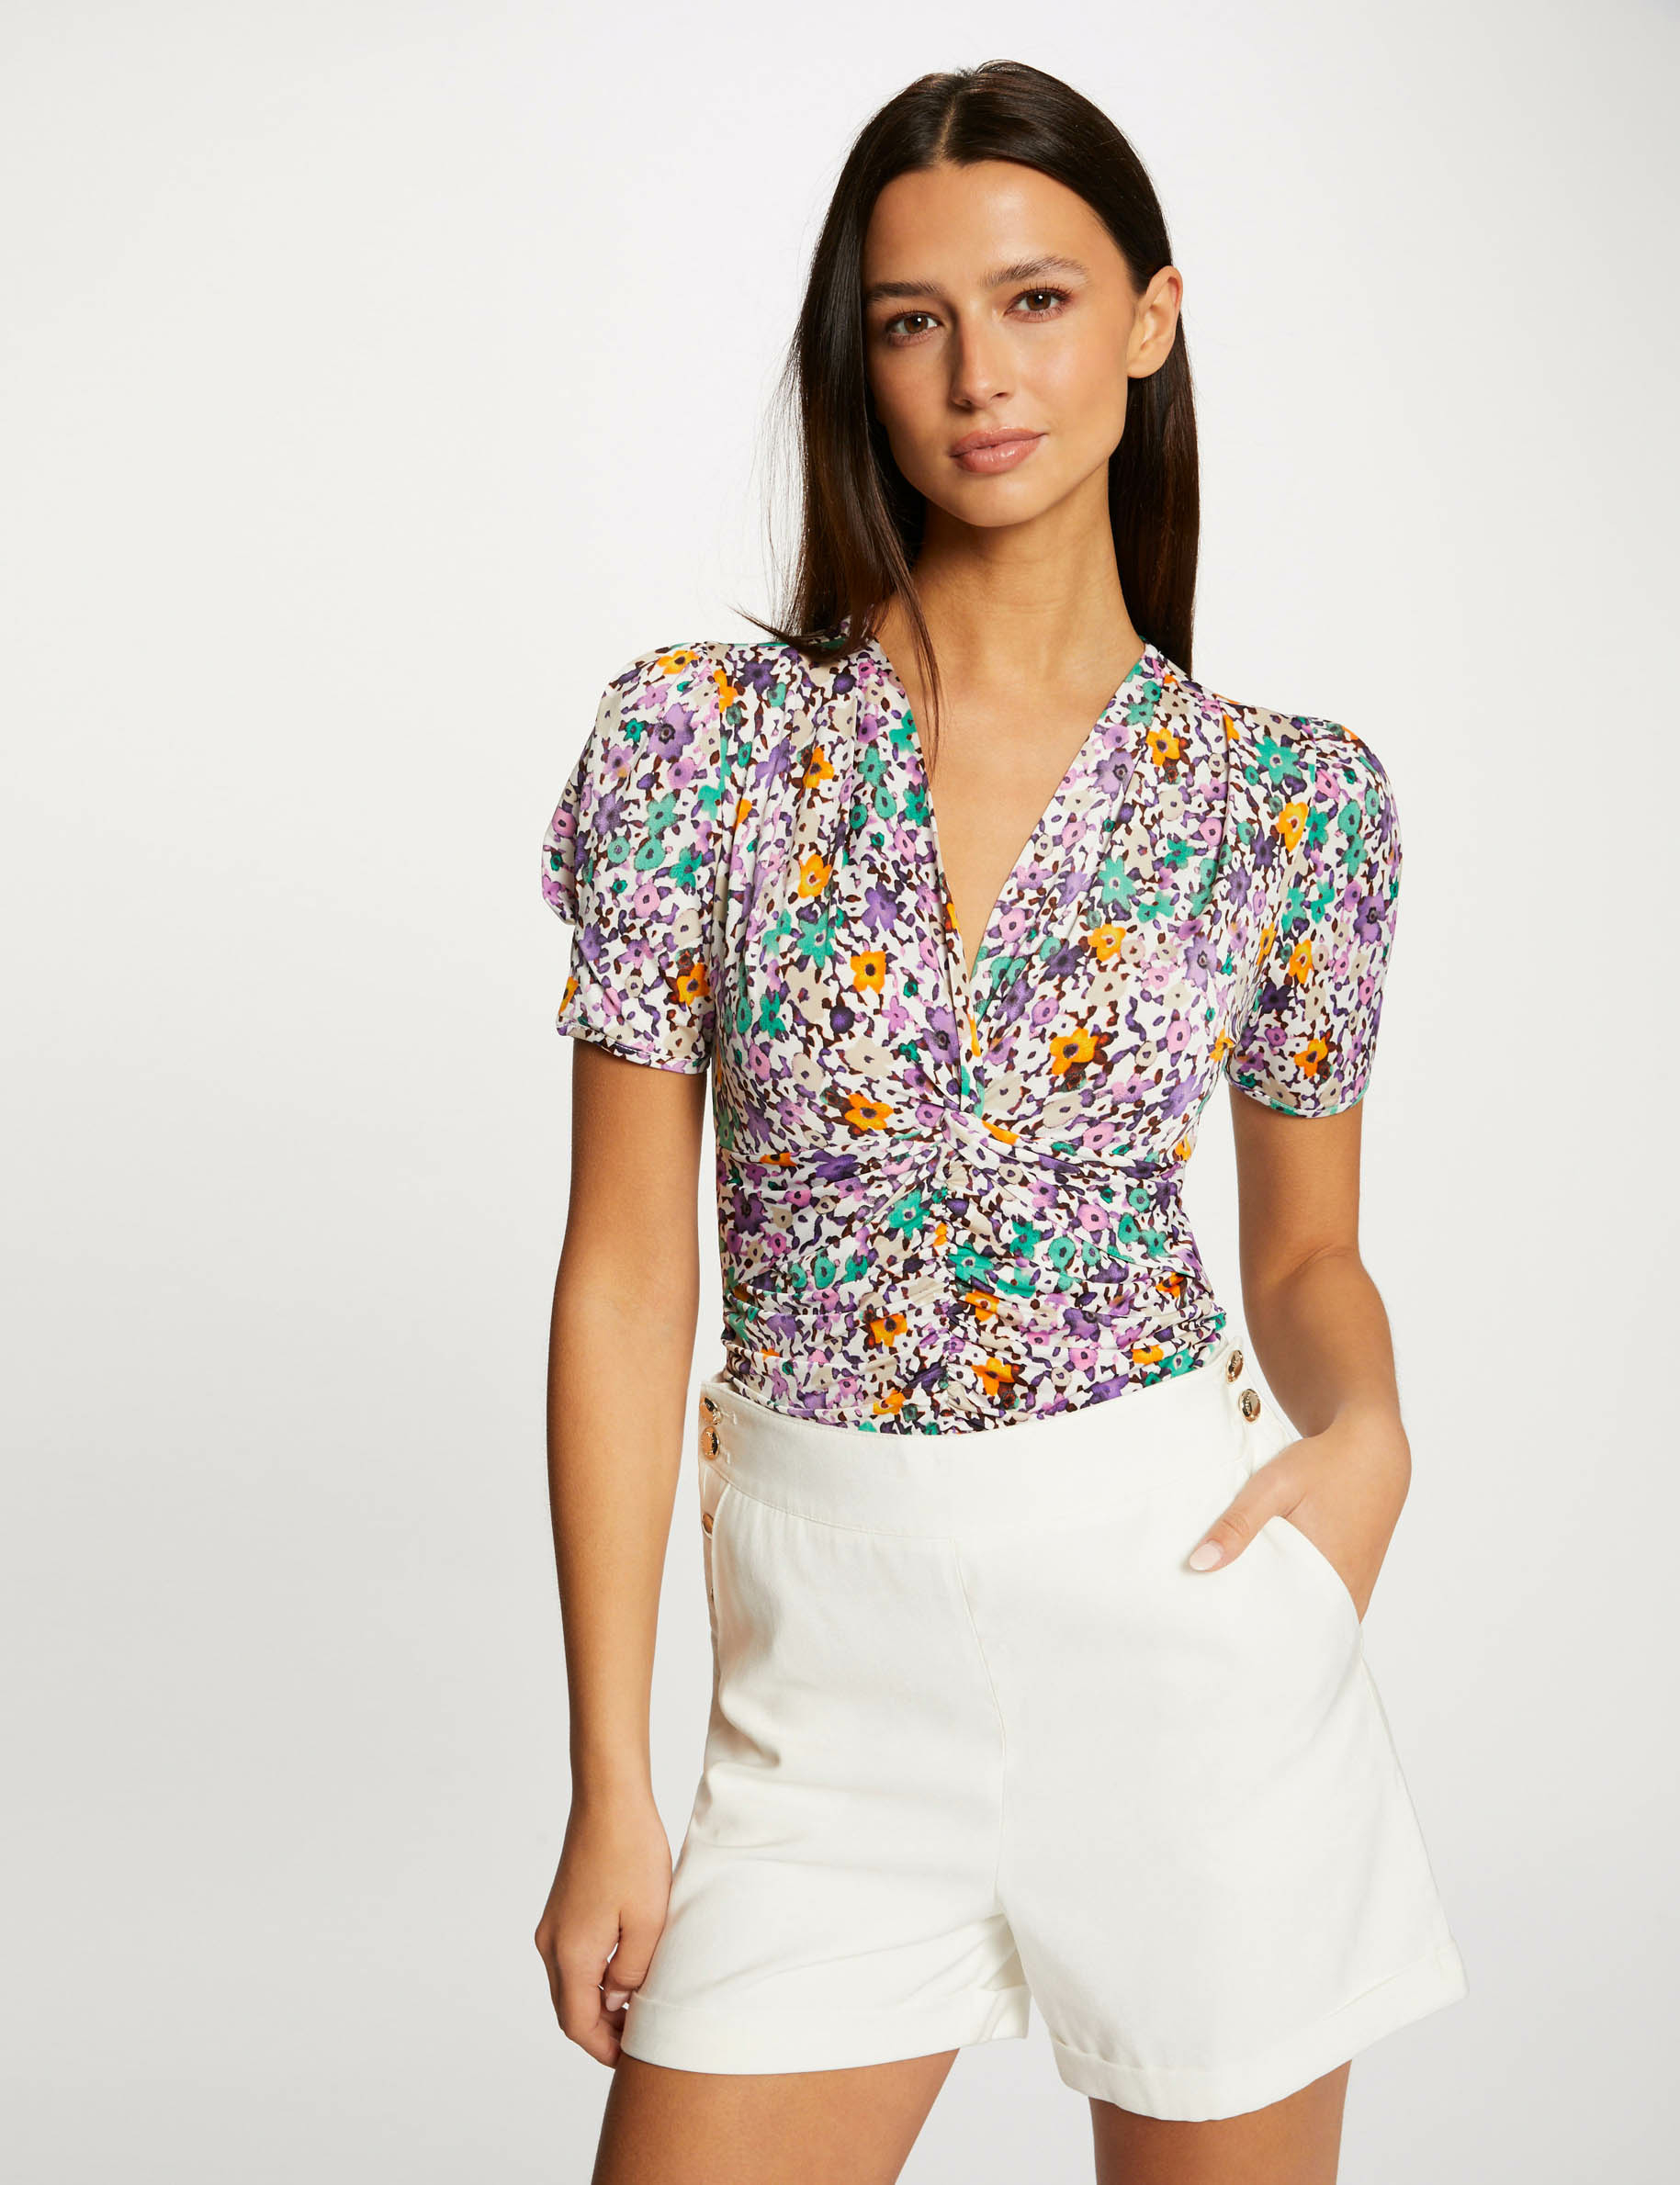 Short-sleeved t-shirt floral print multico ladies'